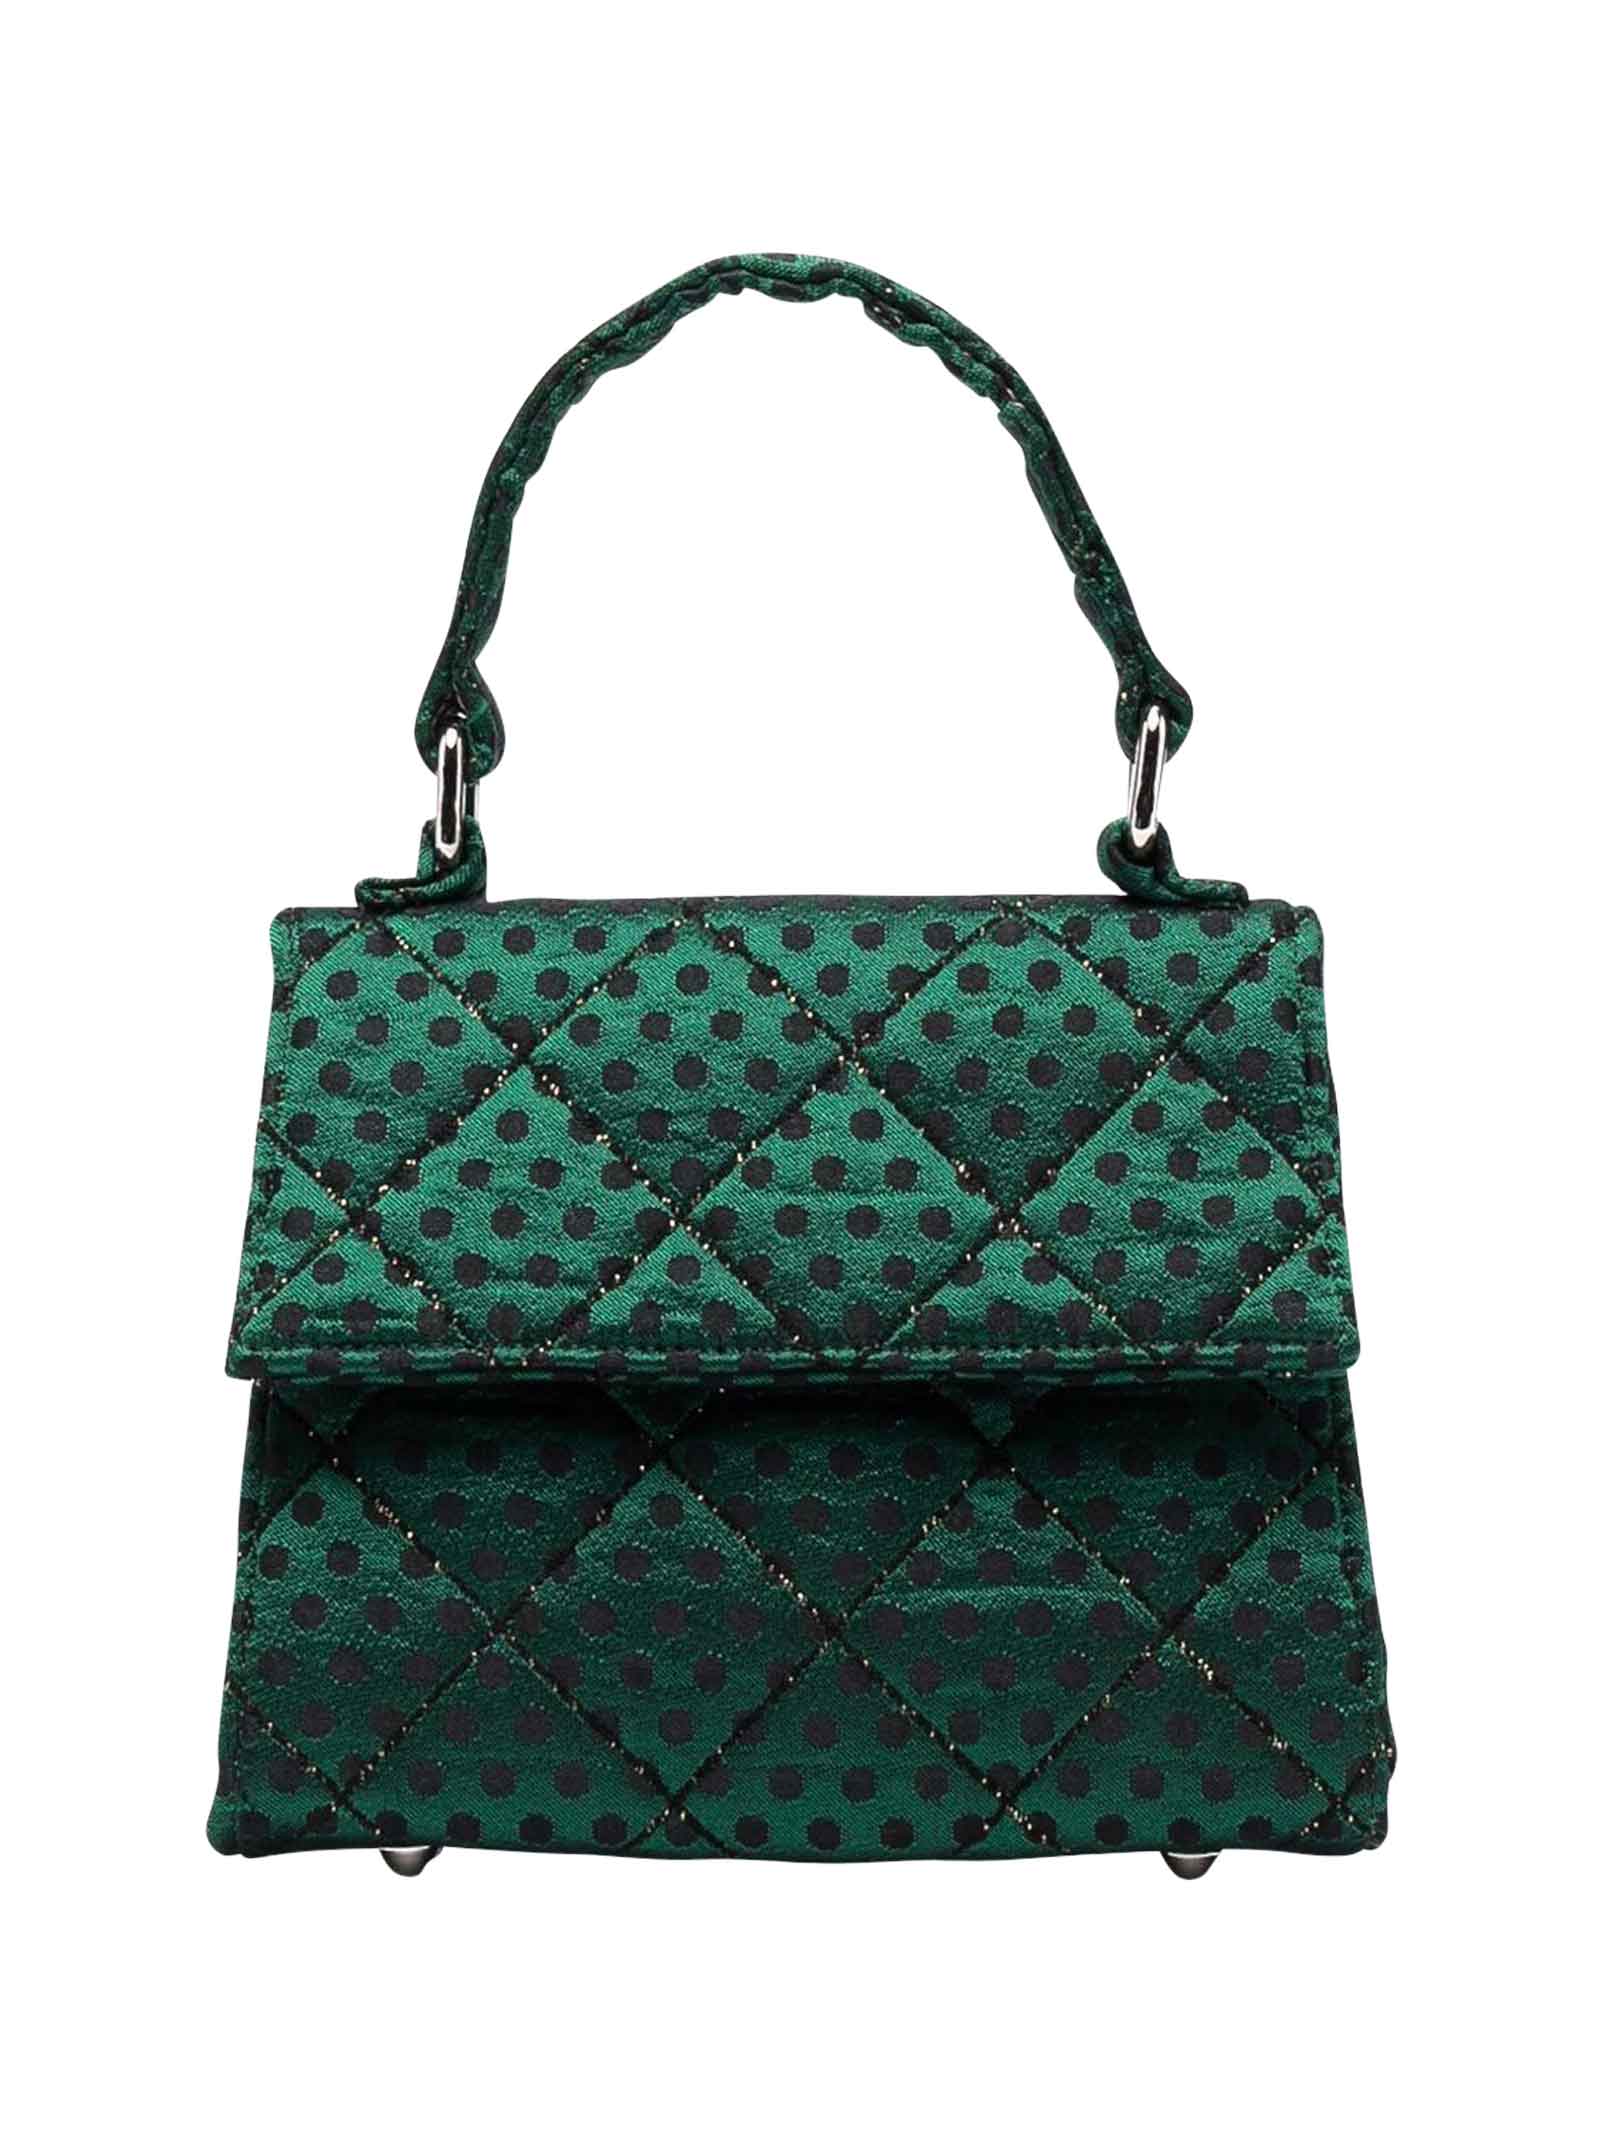 MiMiSol Green Bag For Girls.